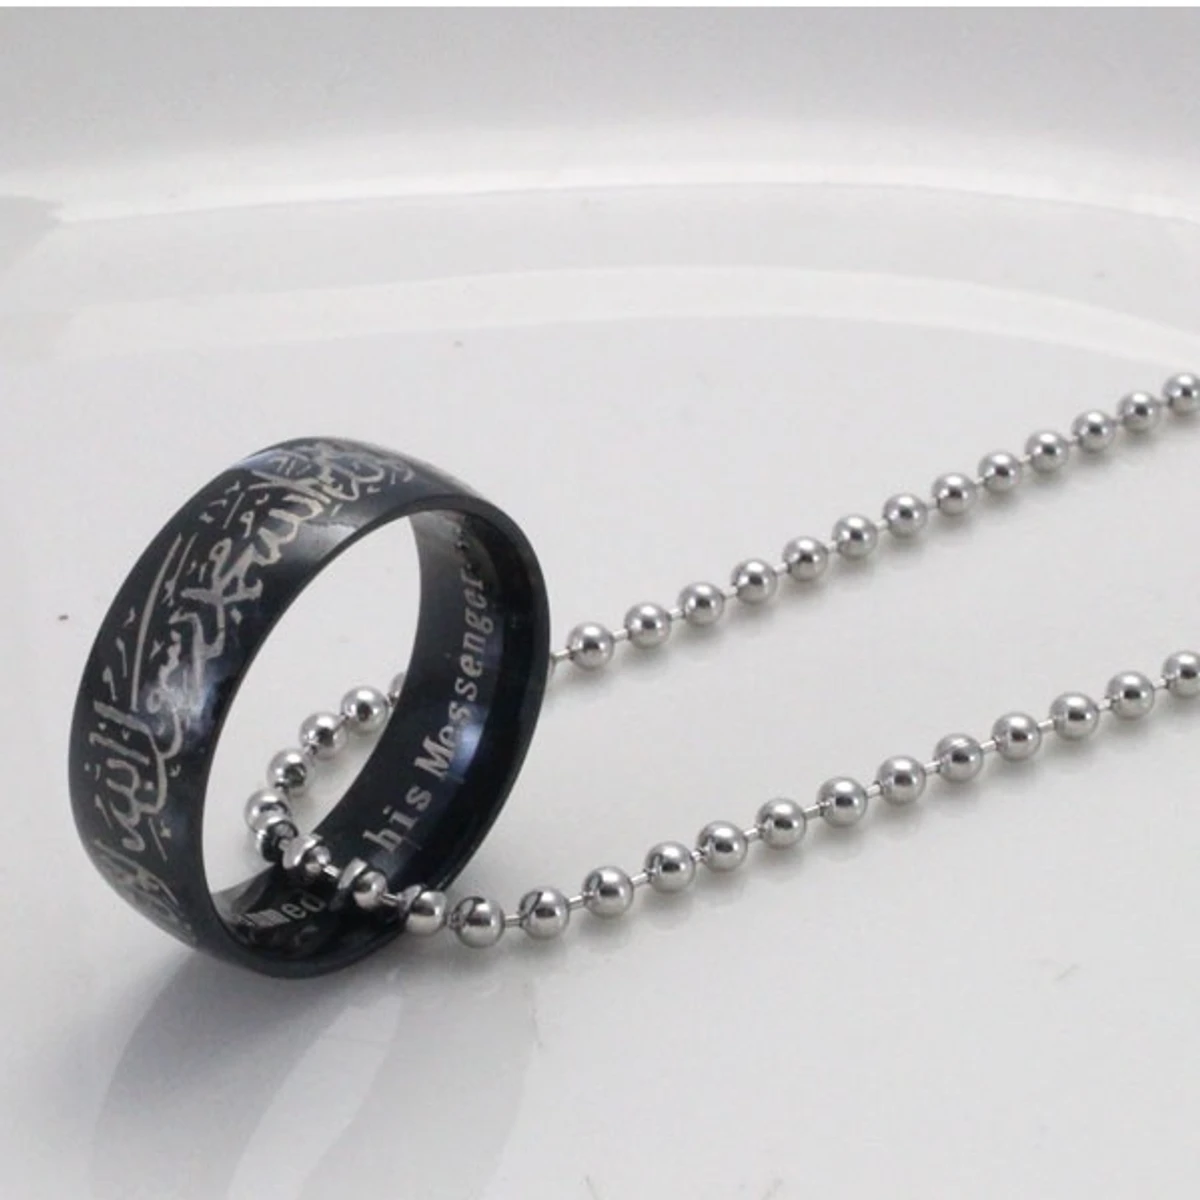 Lailahaillallah Muhammadarrasulullah Finger Ring With Chain Locket For Men & Women